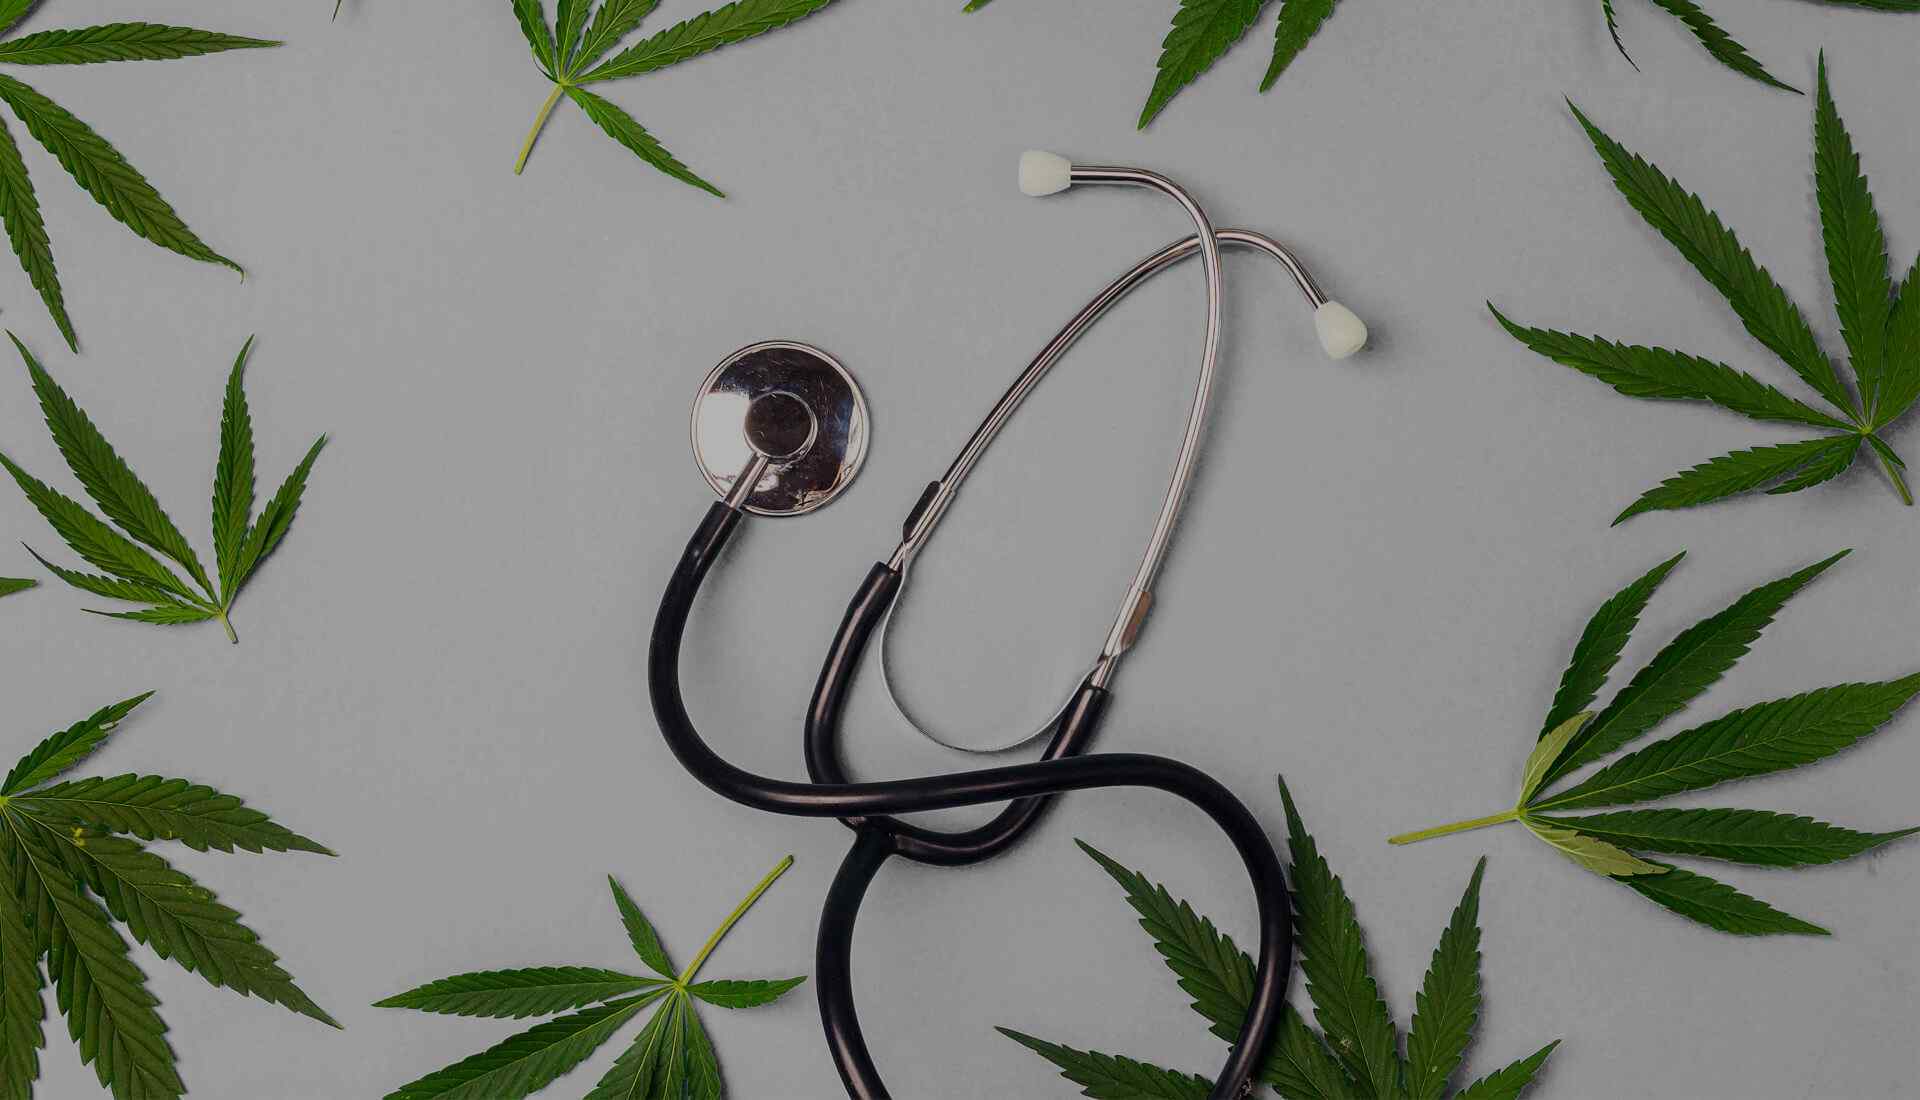 NHSOF MD marijuana doctors